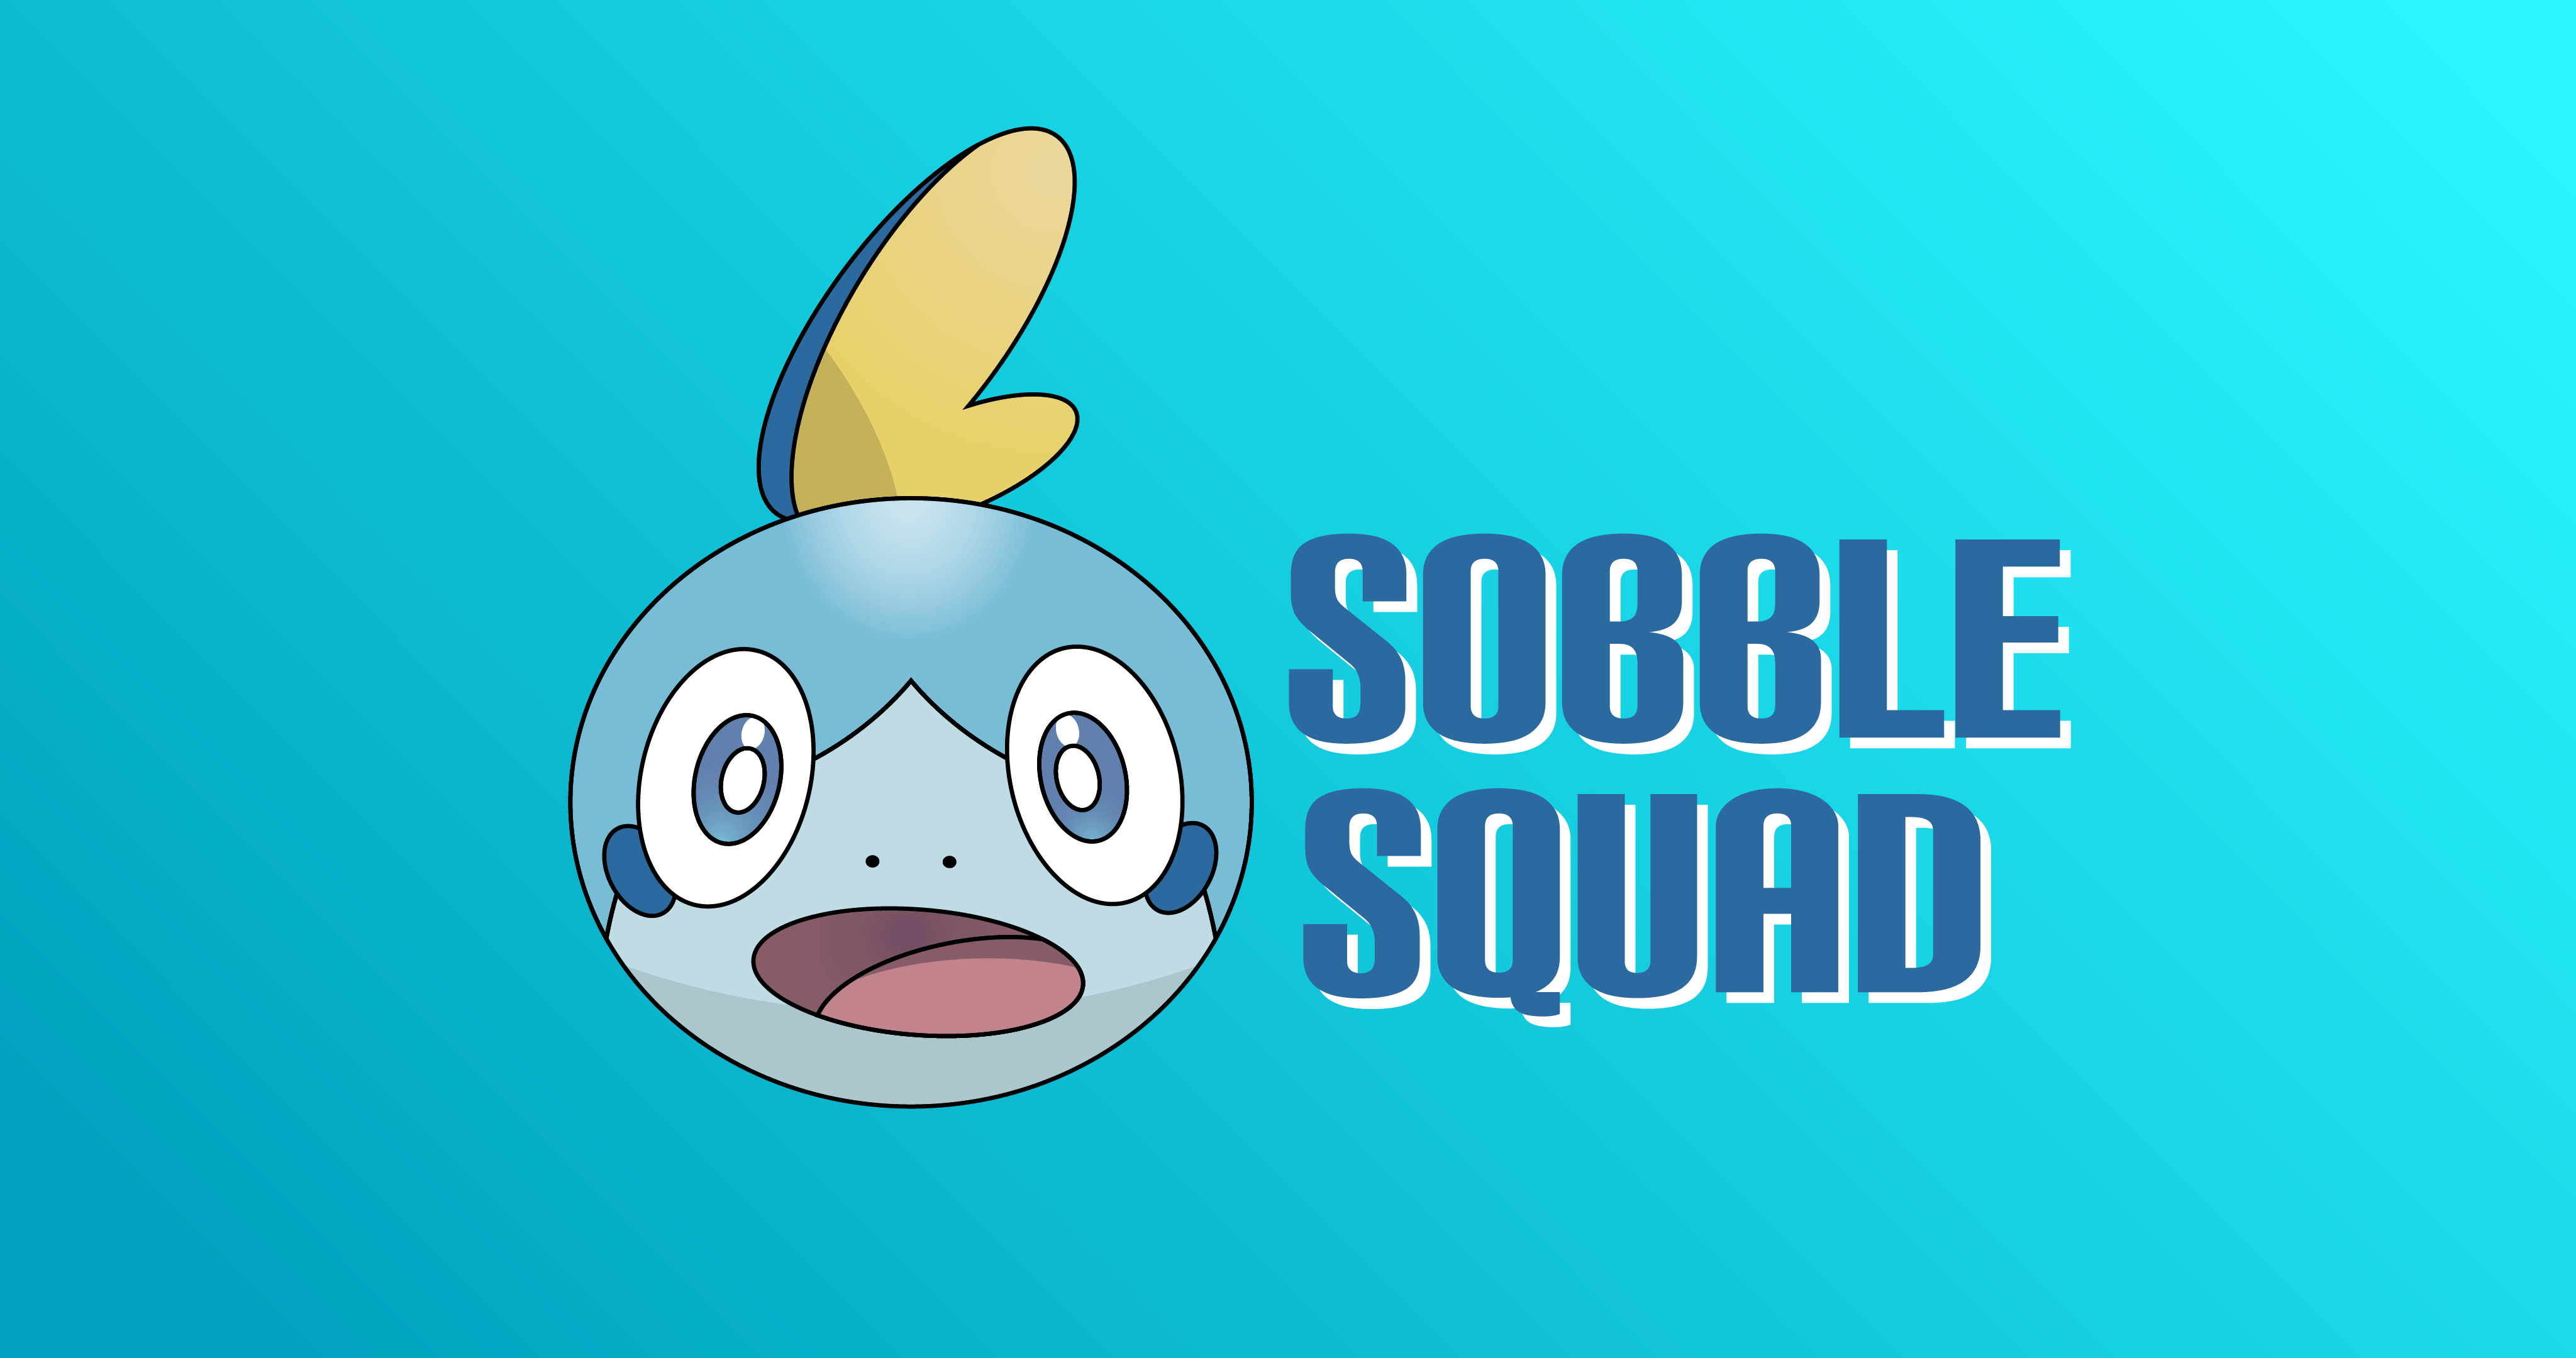 Sobble Squad Wallpaper